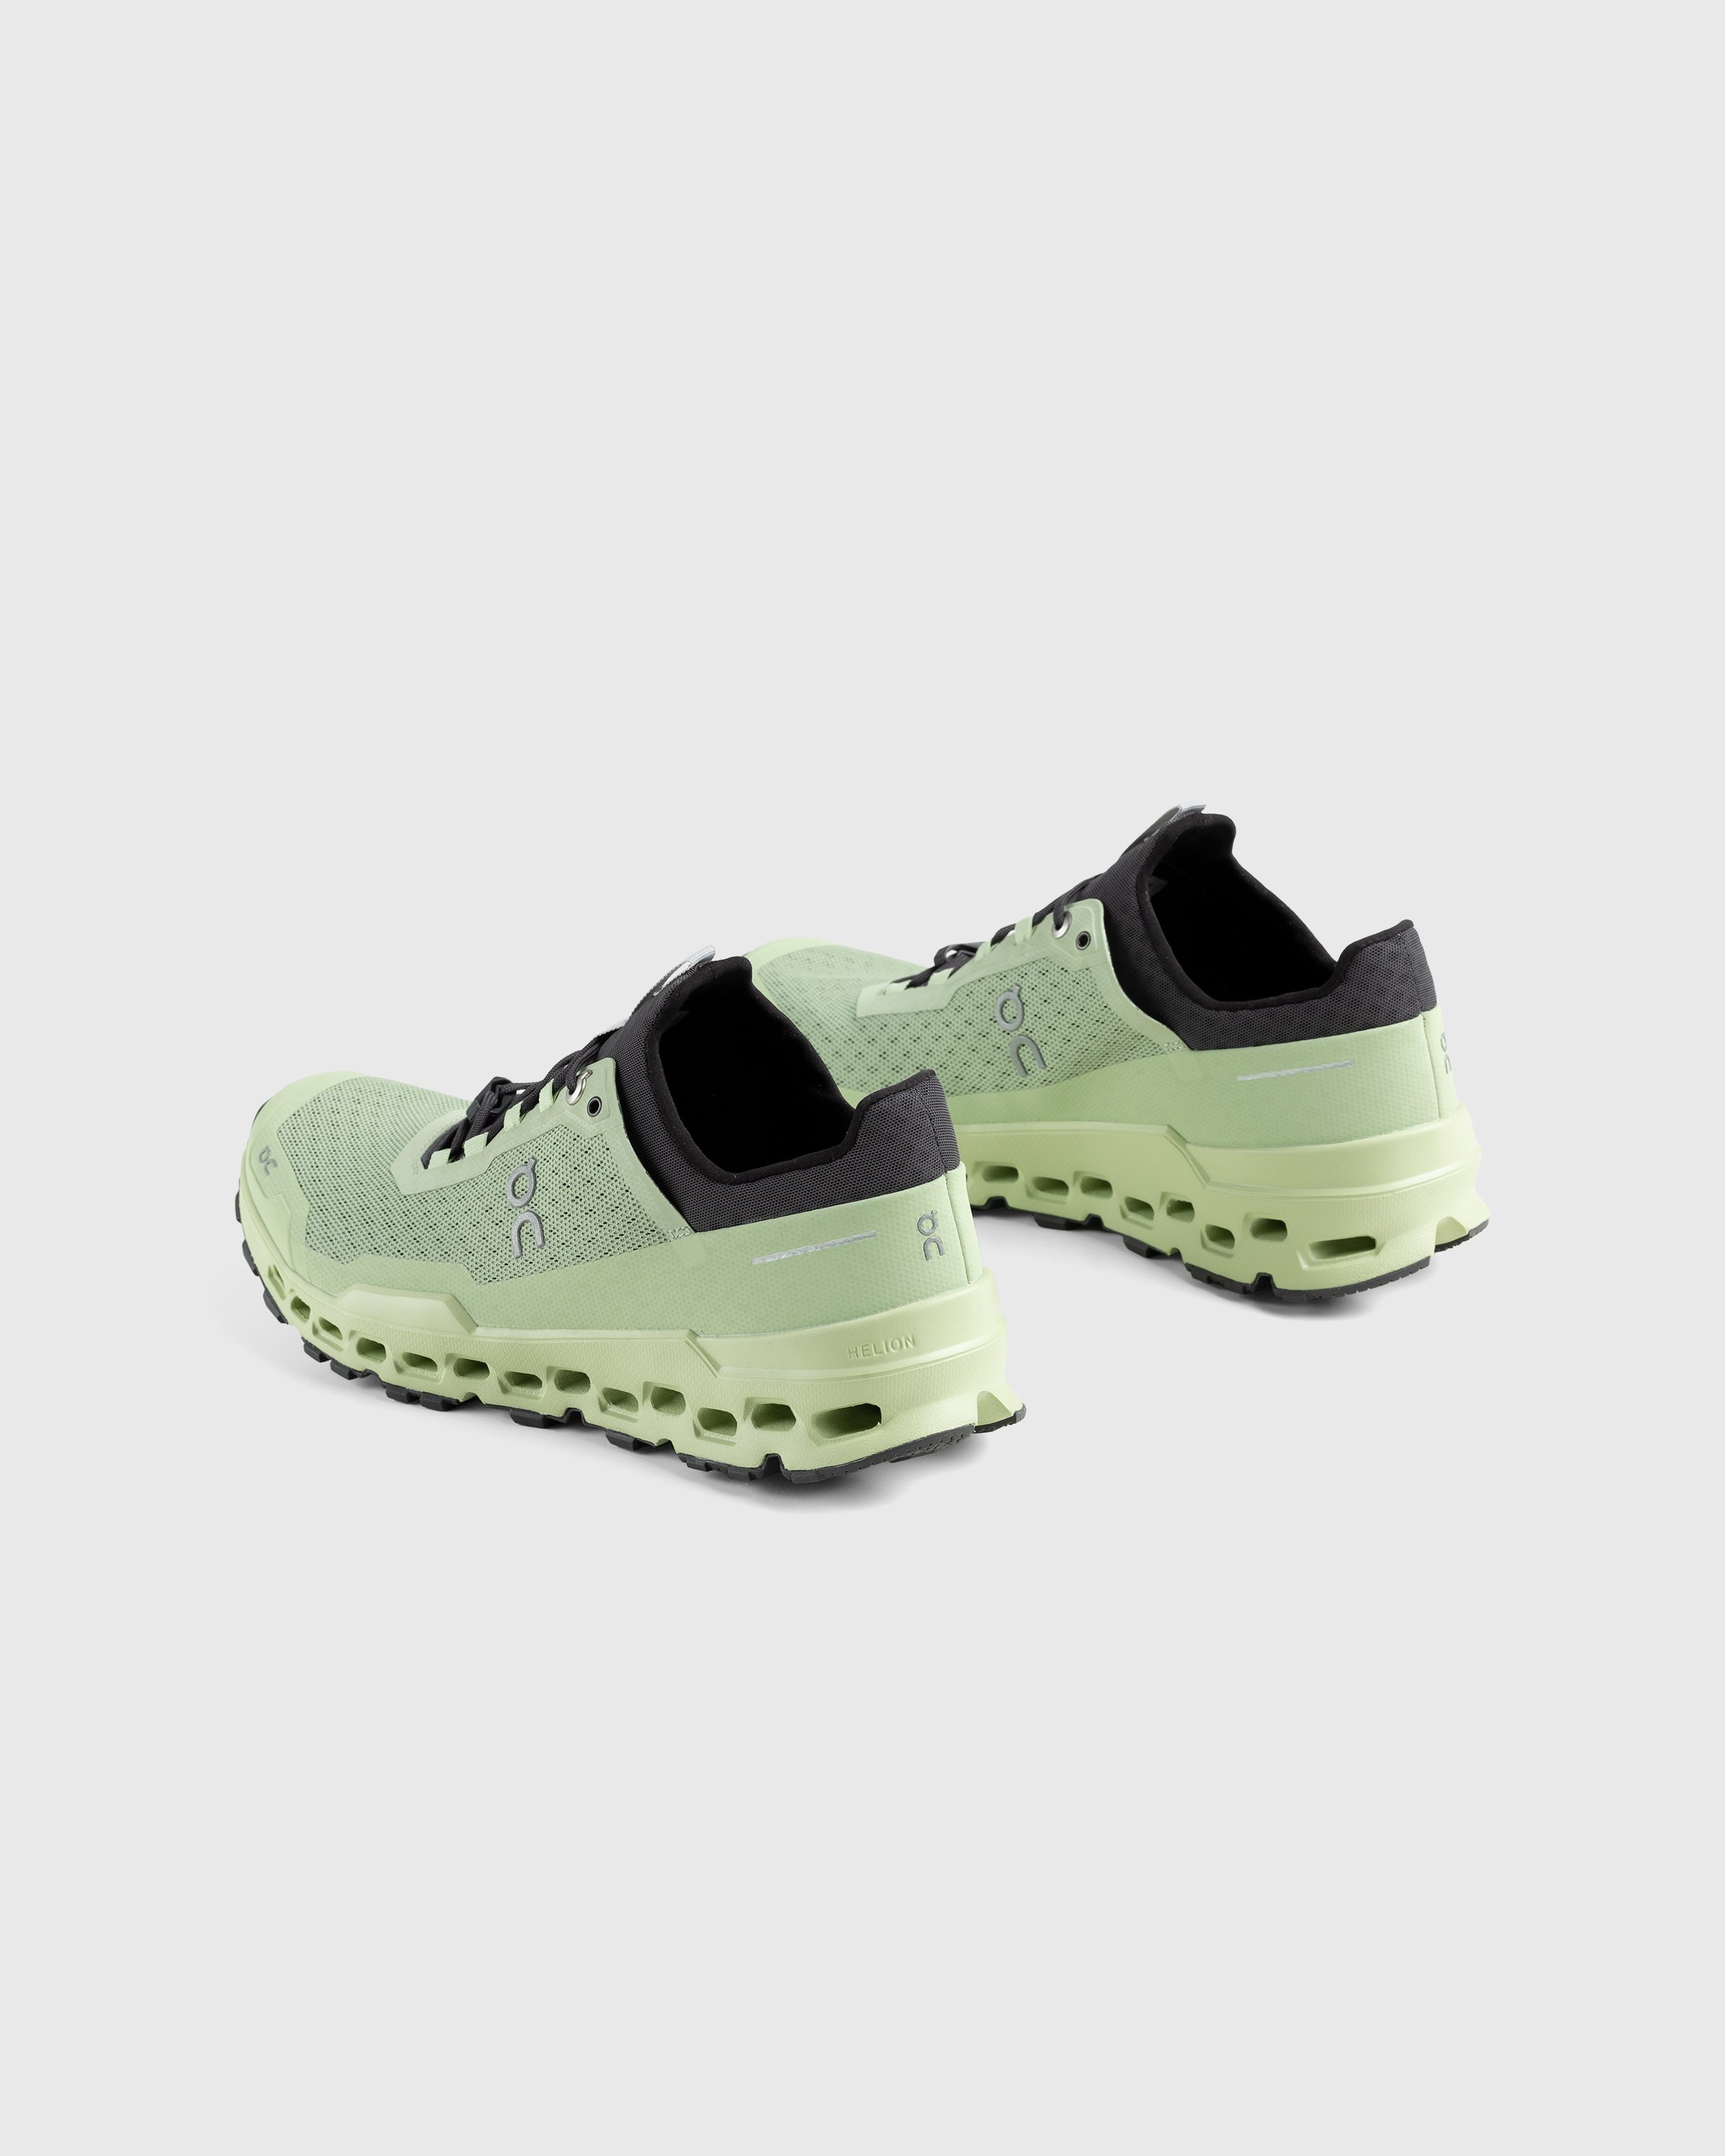 On - Cloudultra Vine/Meadow - Footwear - Green - Image 4